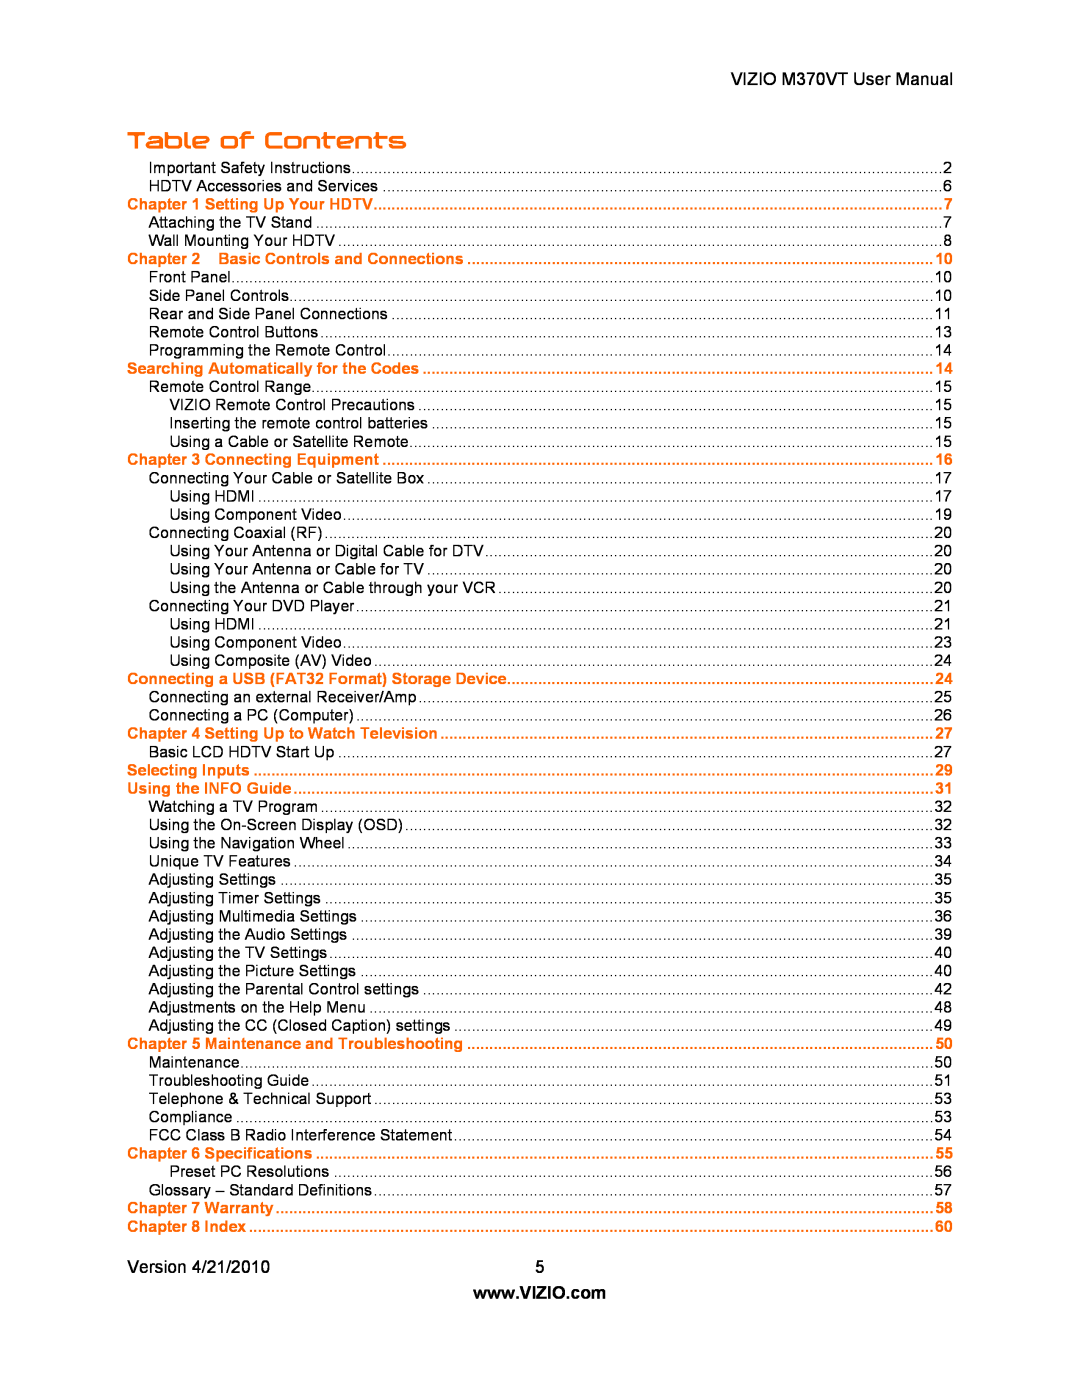 Vizio M370VT manual Table of Contents 